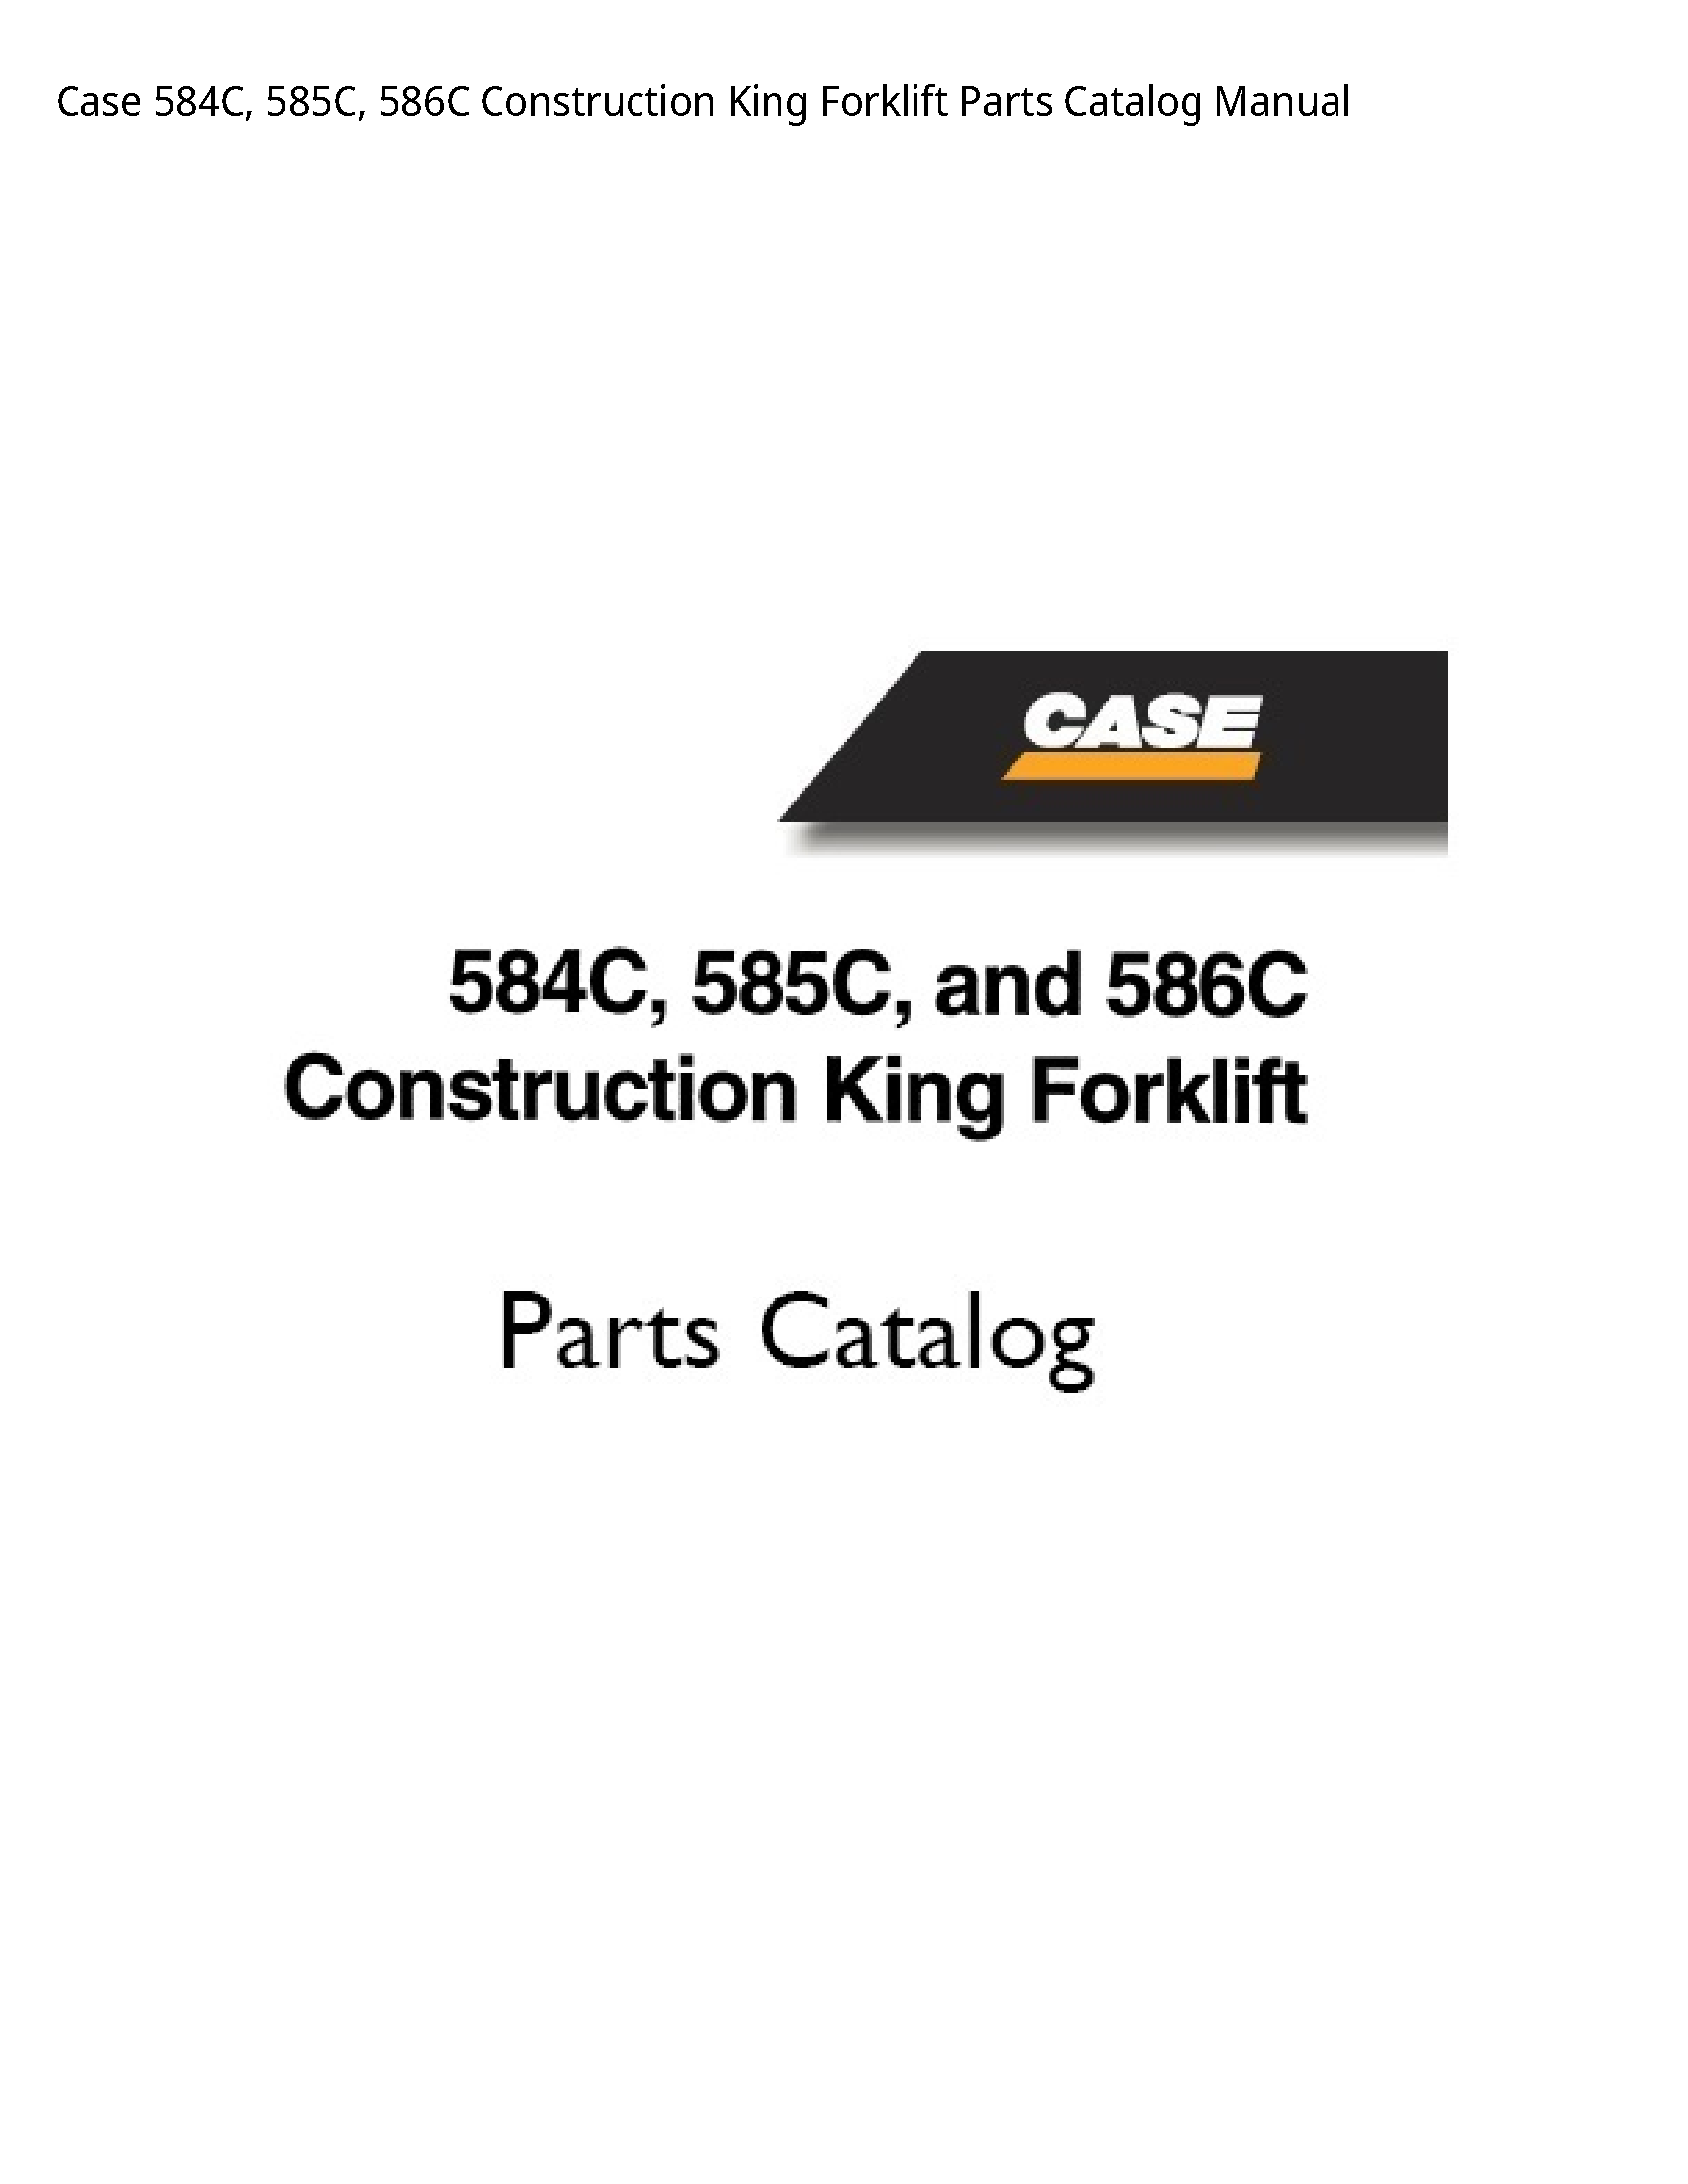 Case/Case IH 584C Construction King Forklift Parts Catalog manual